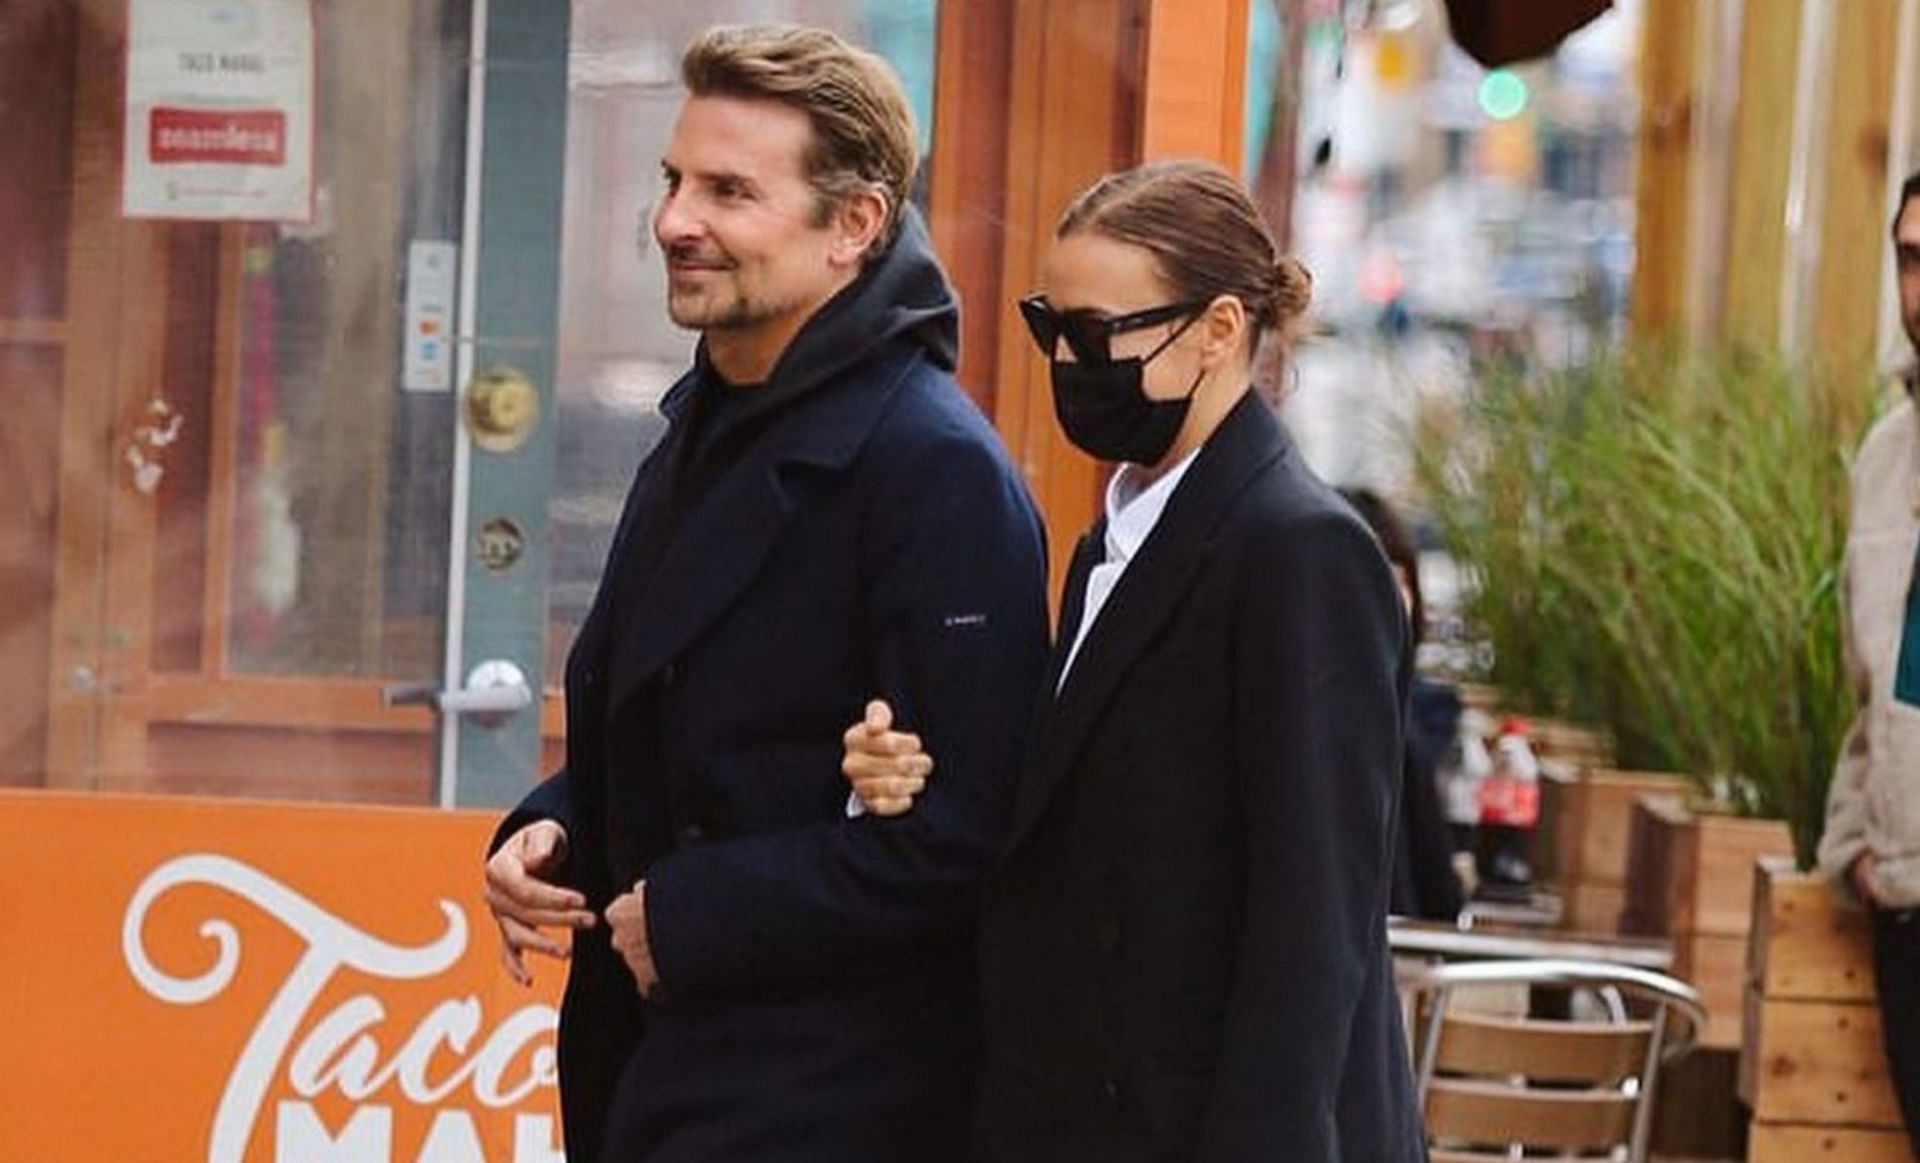 Bradley Cooper and Irina Shayk on the streets of Manhattan West Village(image via itseeas/Instagram)